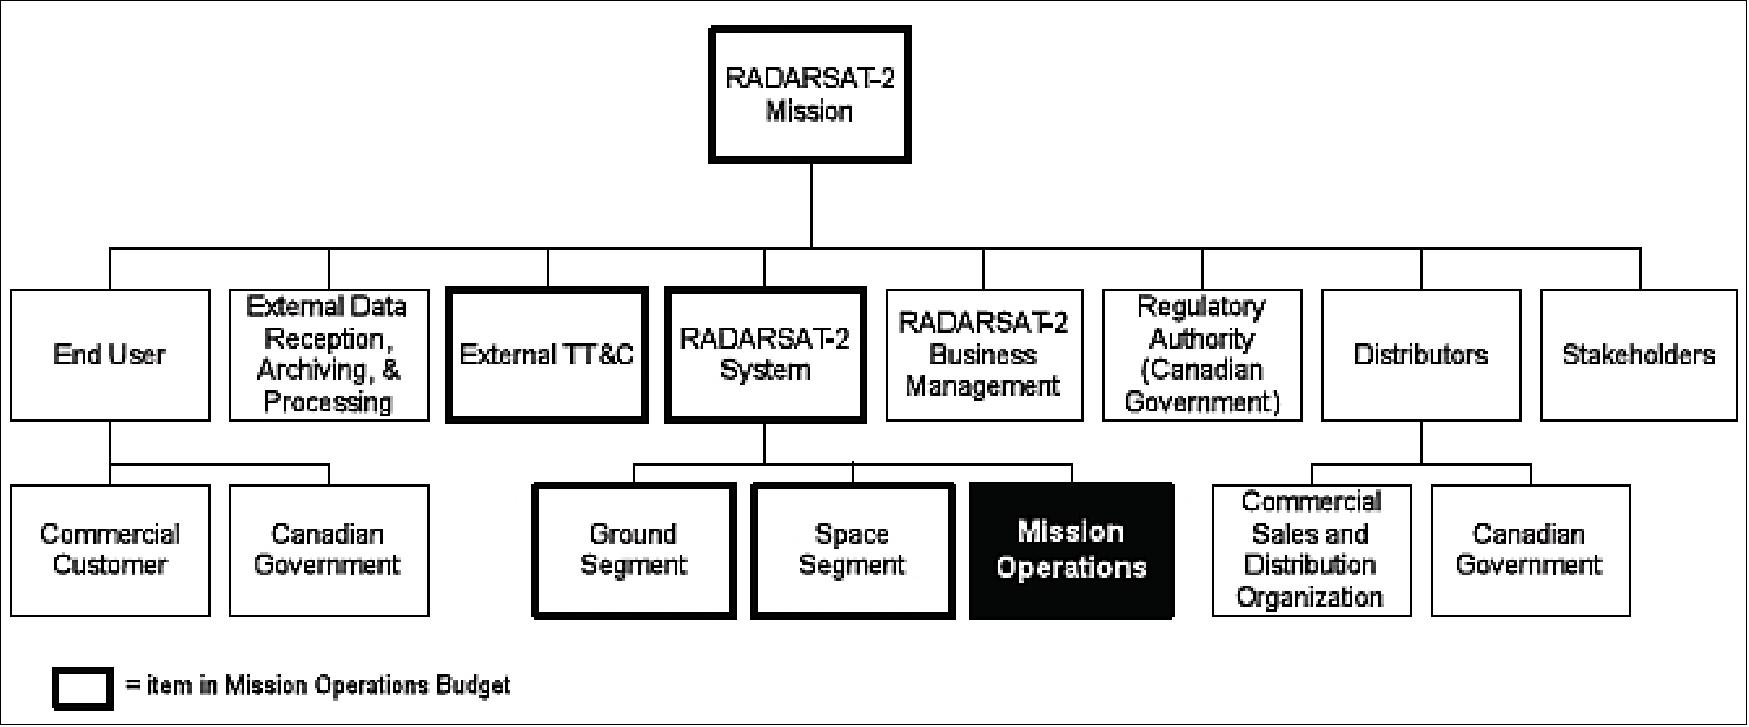 Figure 41: RADARSAT-2 mission components (image credit: MDA)